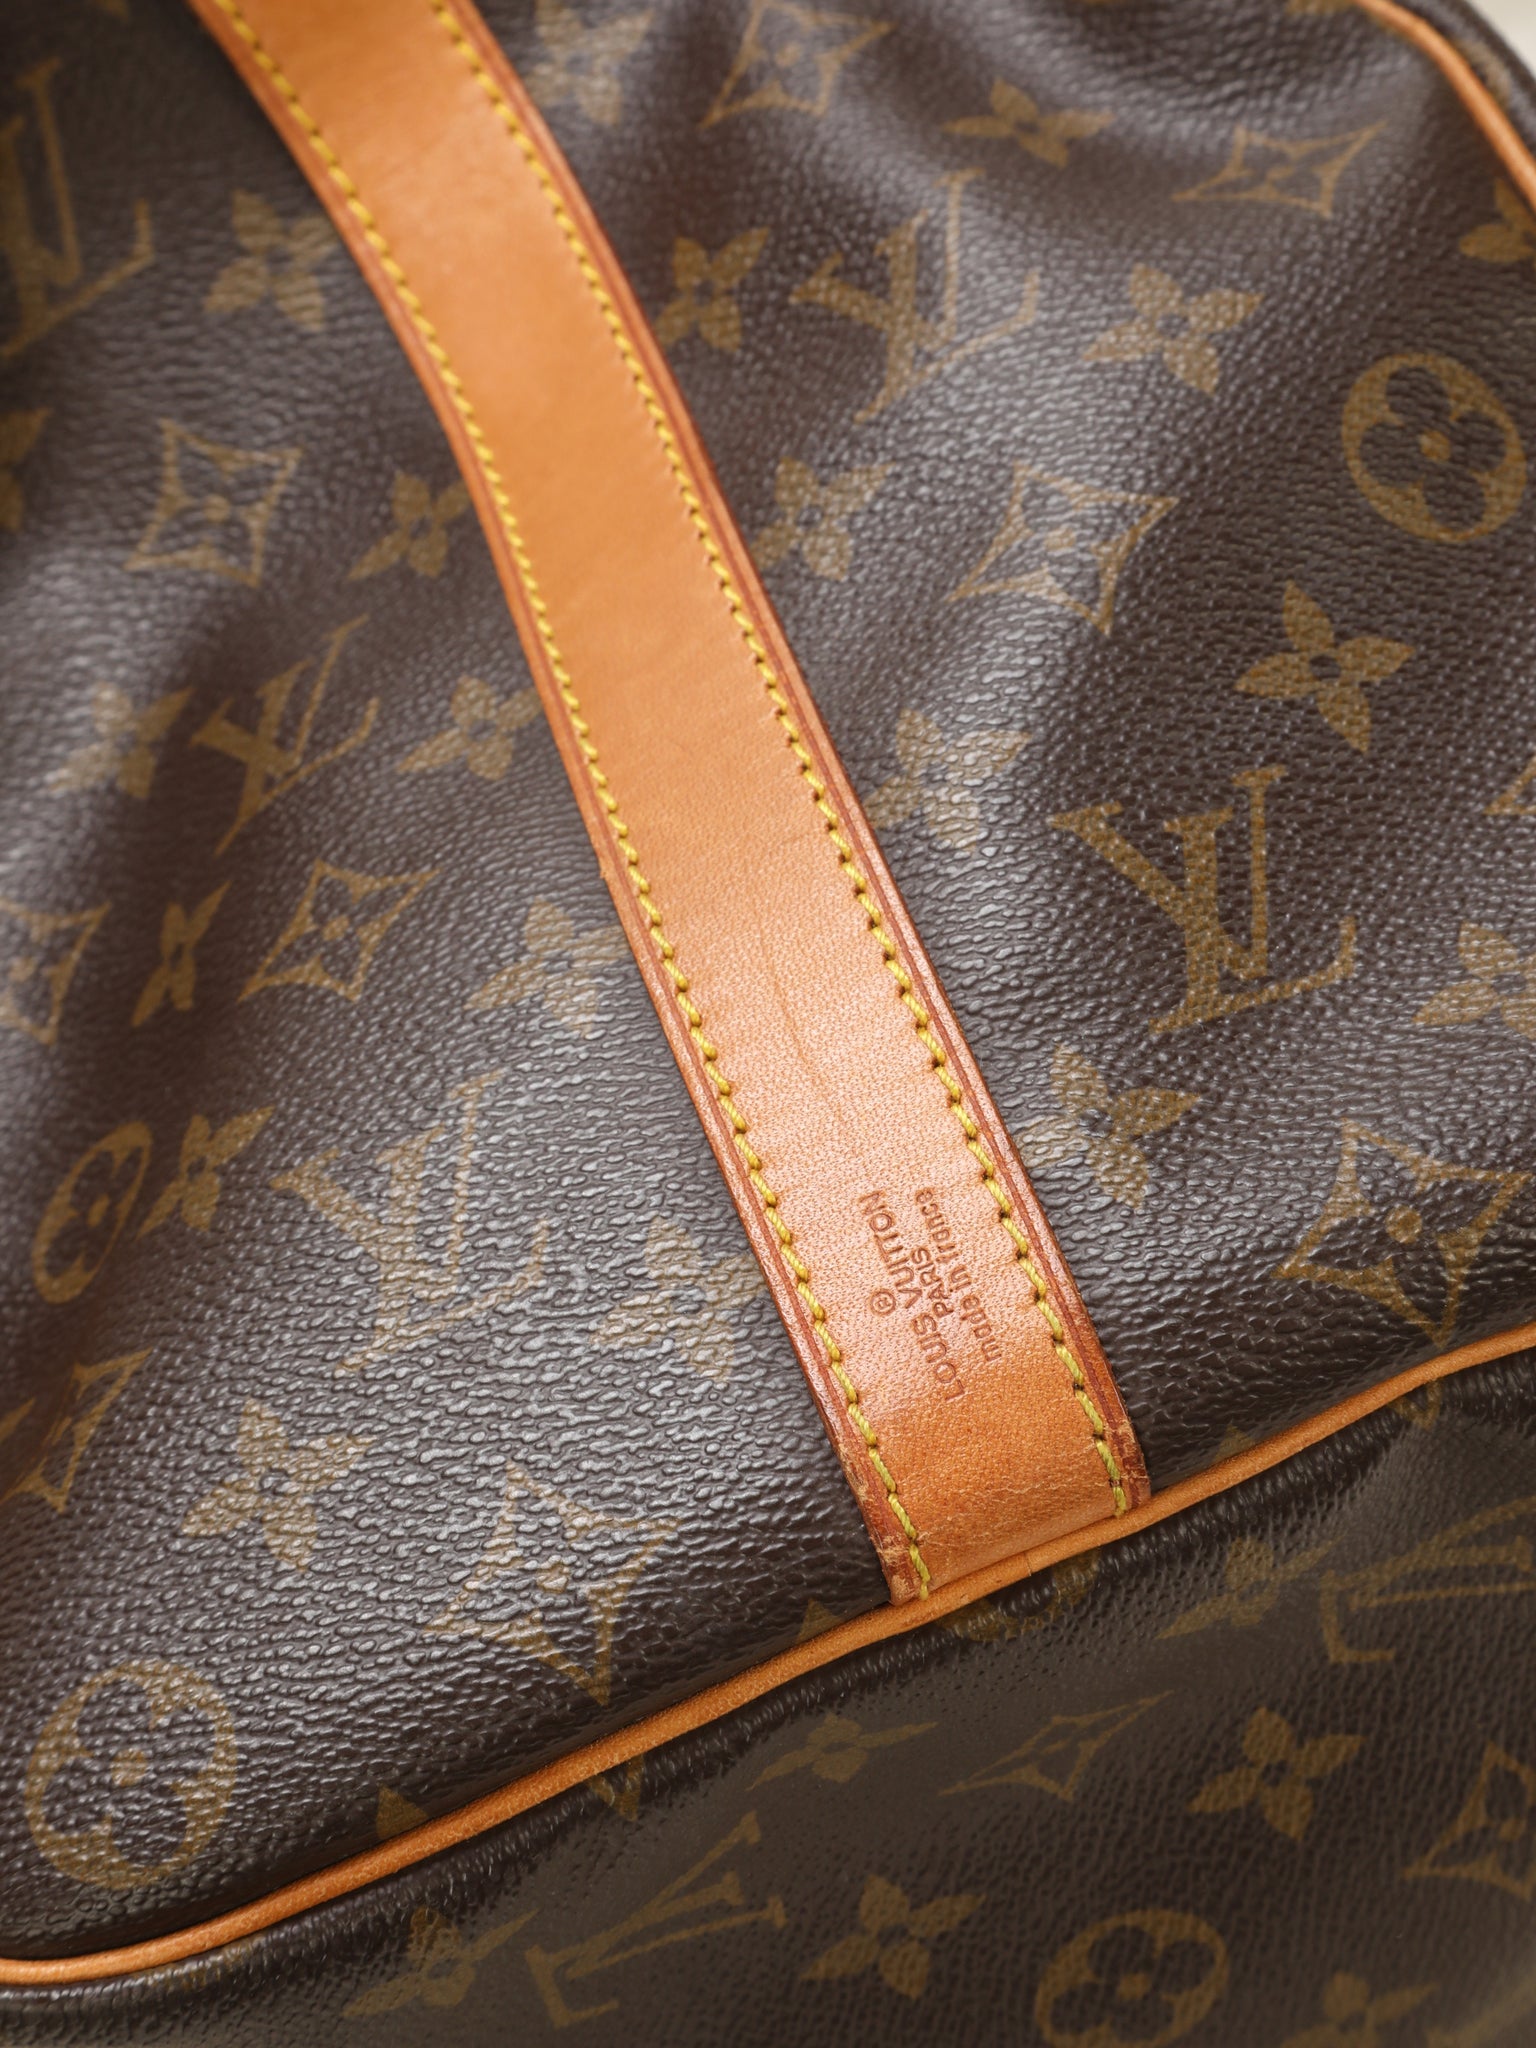 Louis VUITTON Paris Made in France Keepall bag in Monogr…